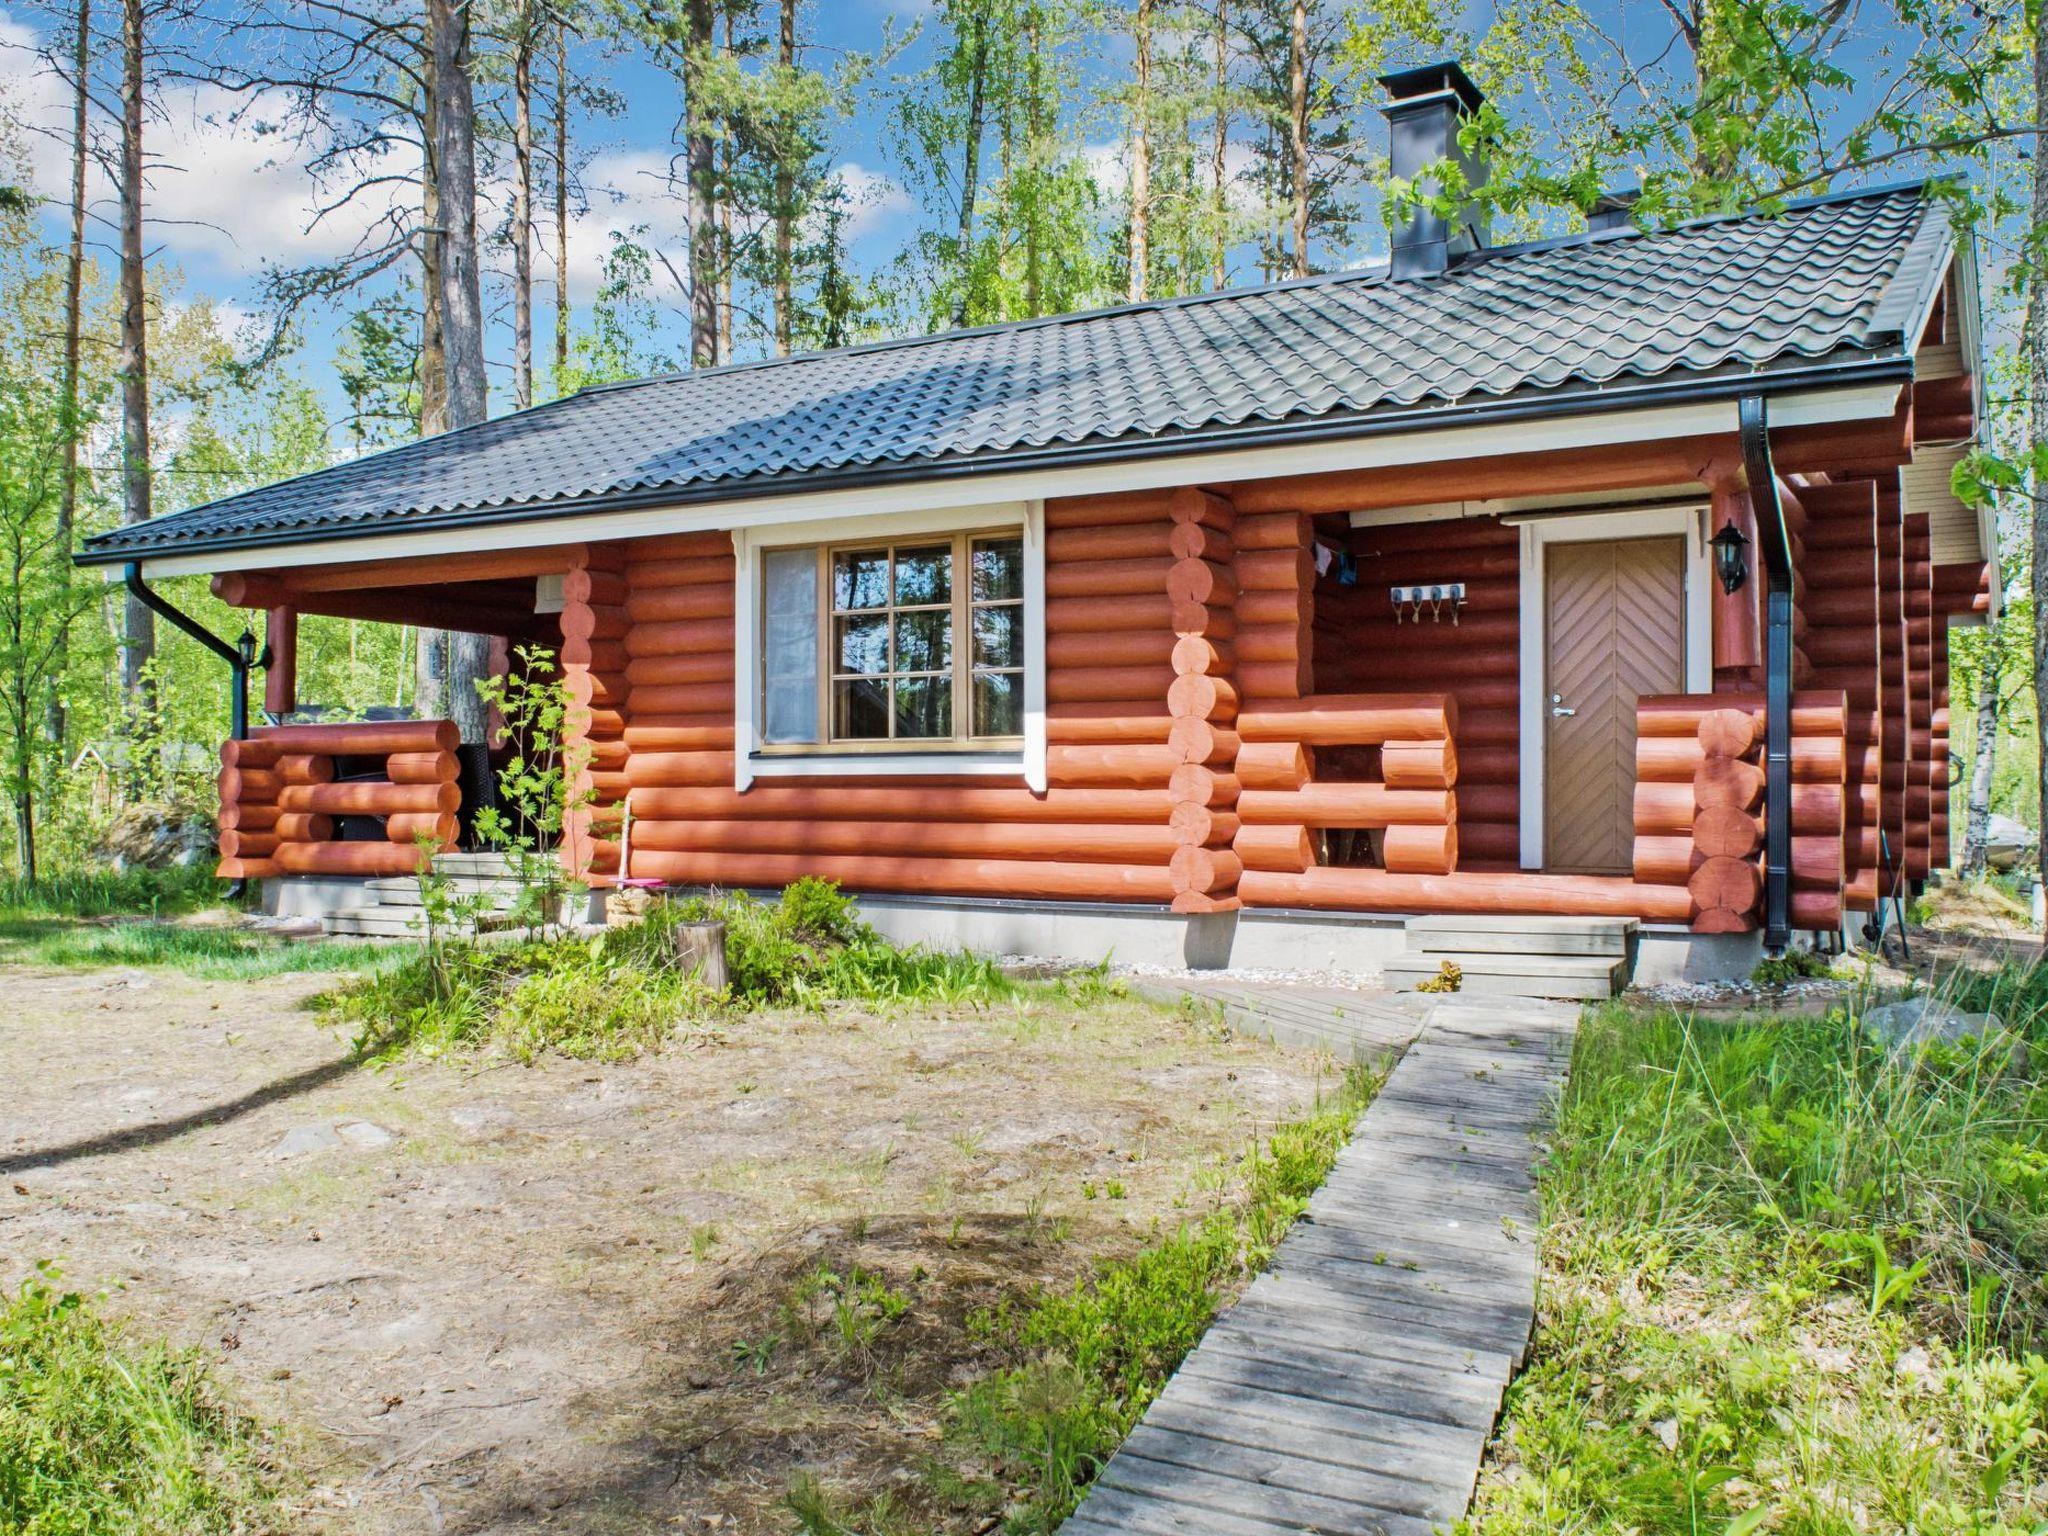 Foto 1 - Casa con 2 camere da letto a Rääkkylä con sauna